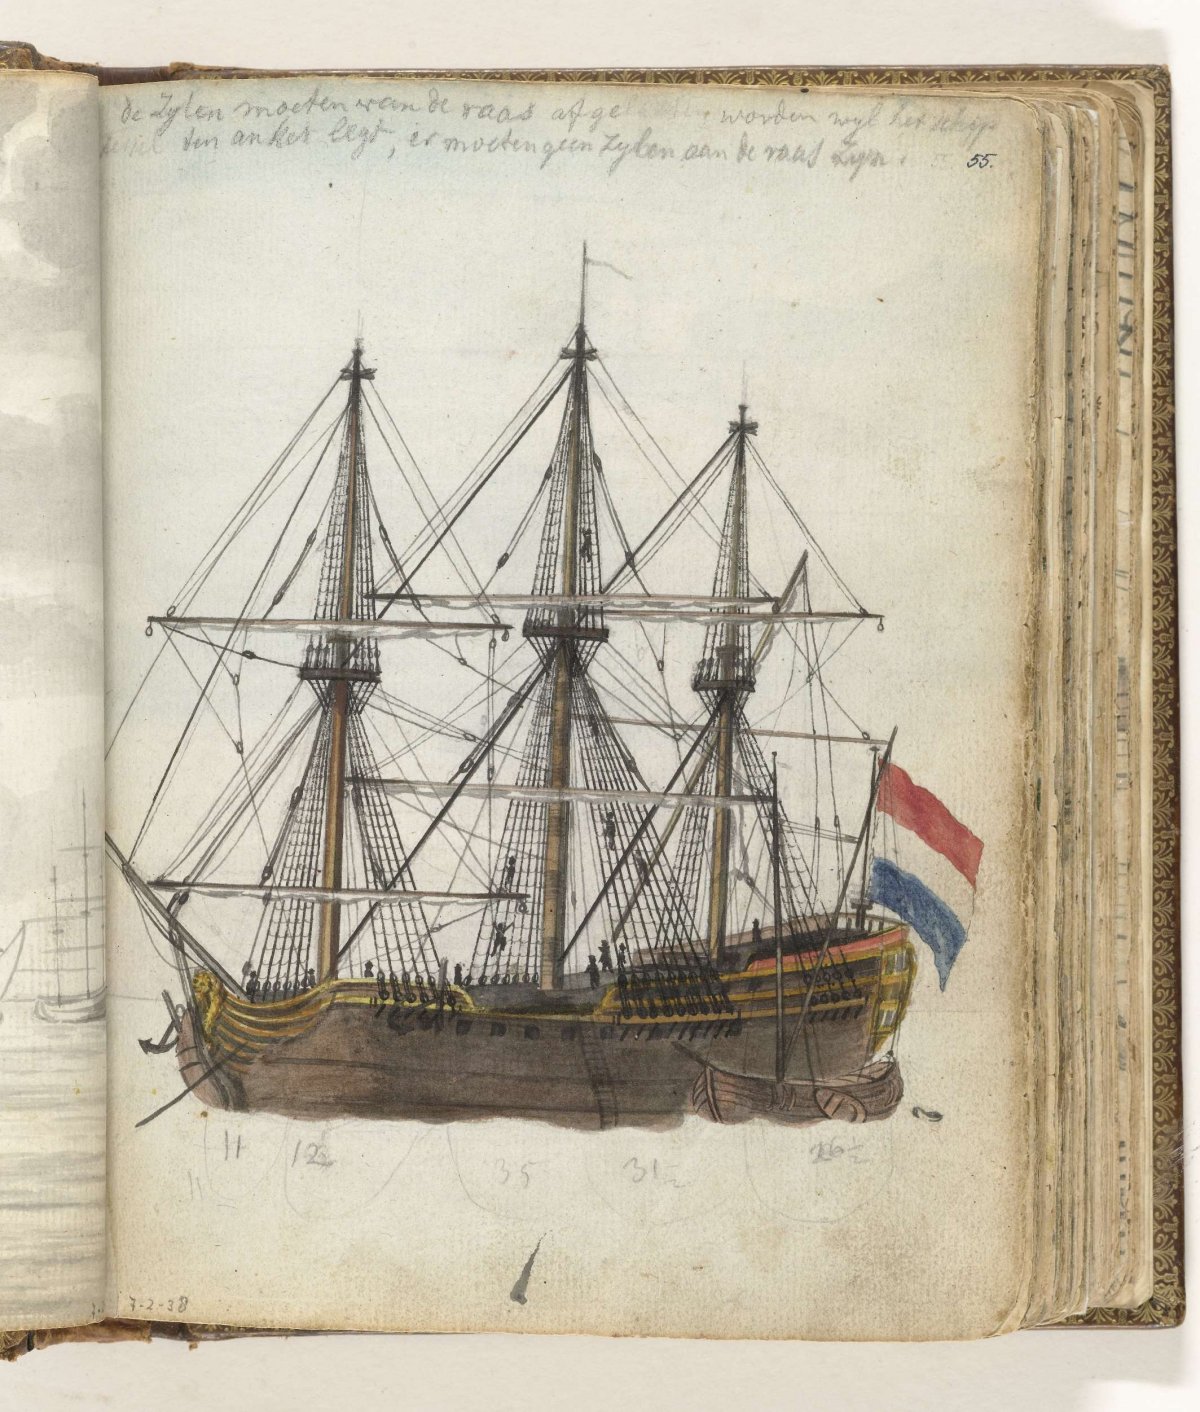 East Indiaman at anchor, Jan Brandes, 1785